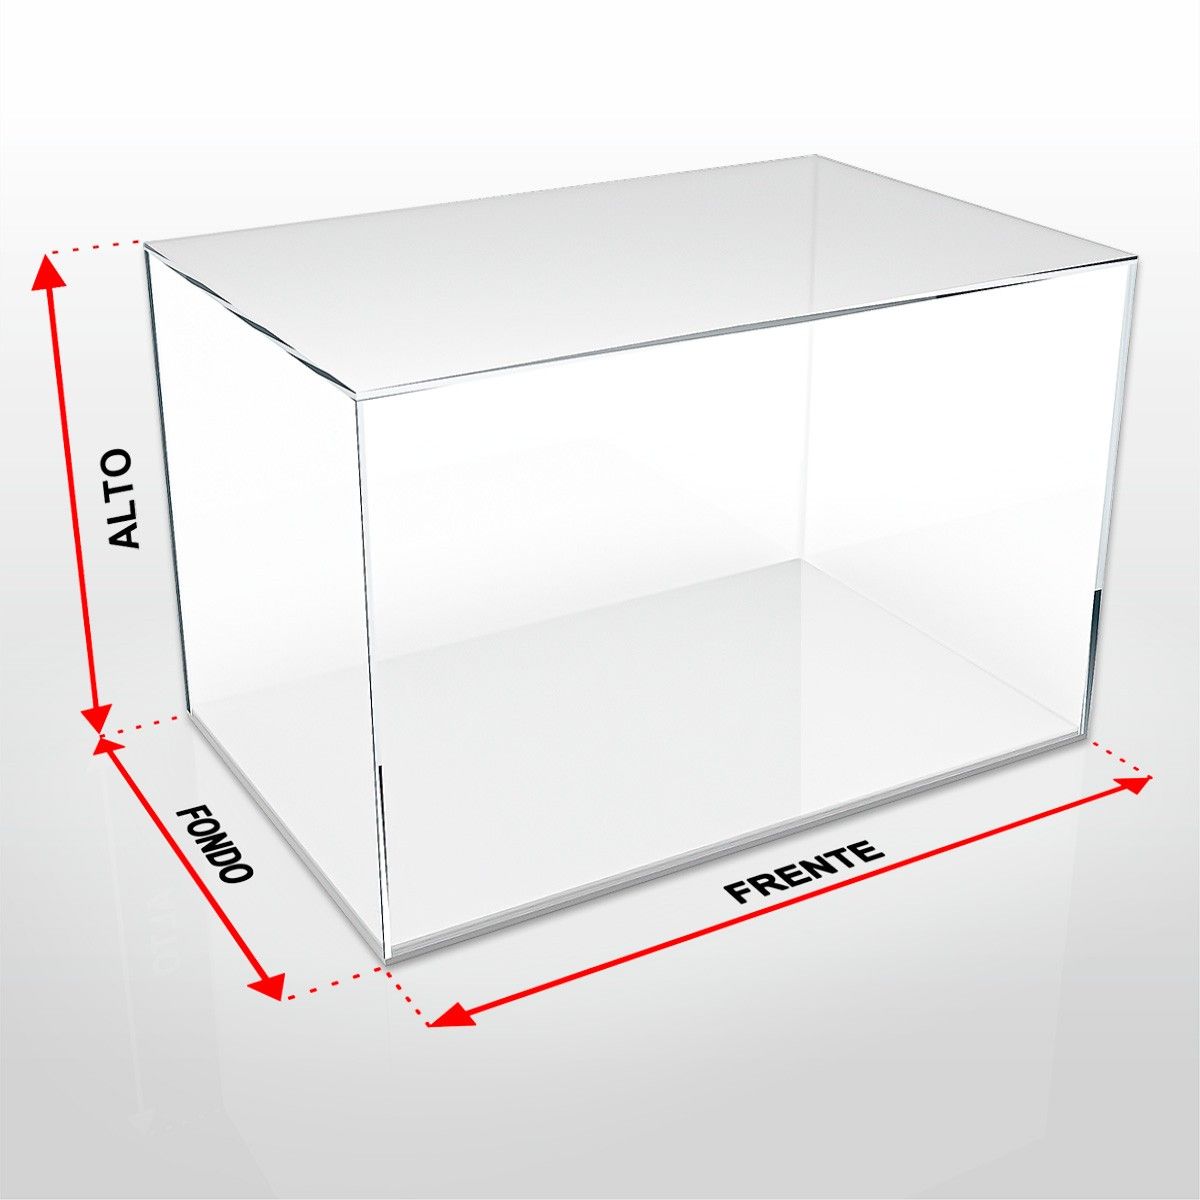 Cubo vitrina 30 cm en metacrilato transparente expositor de pared.